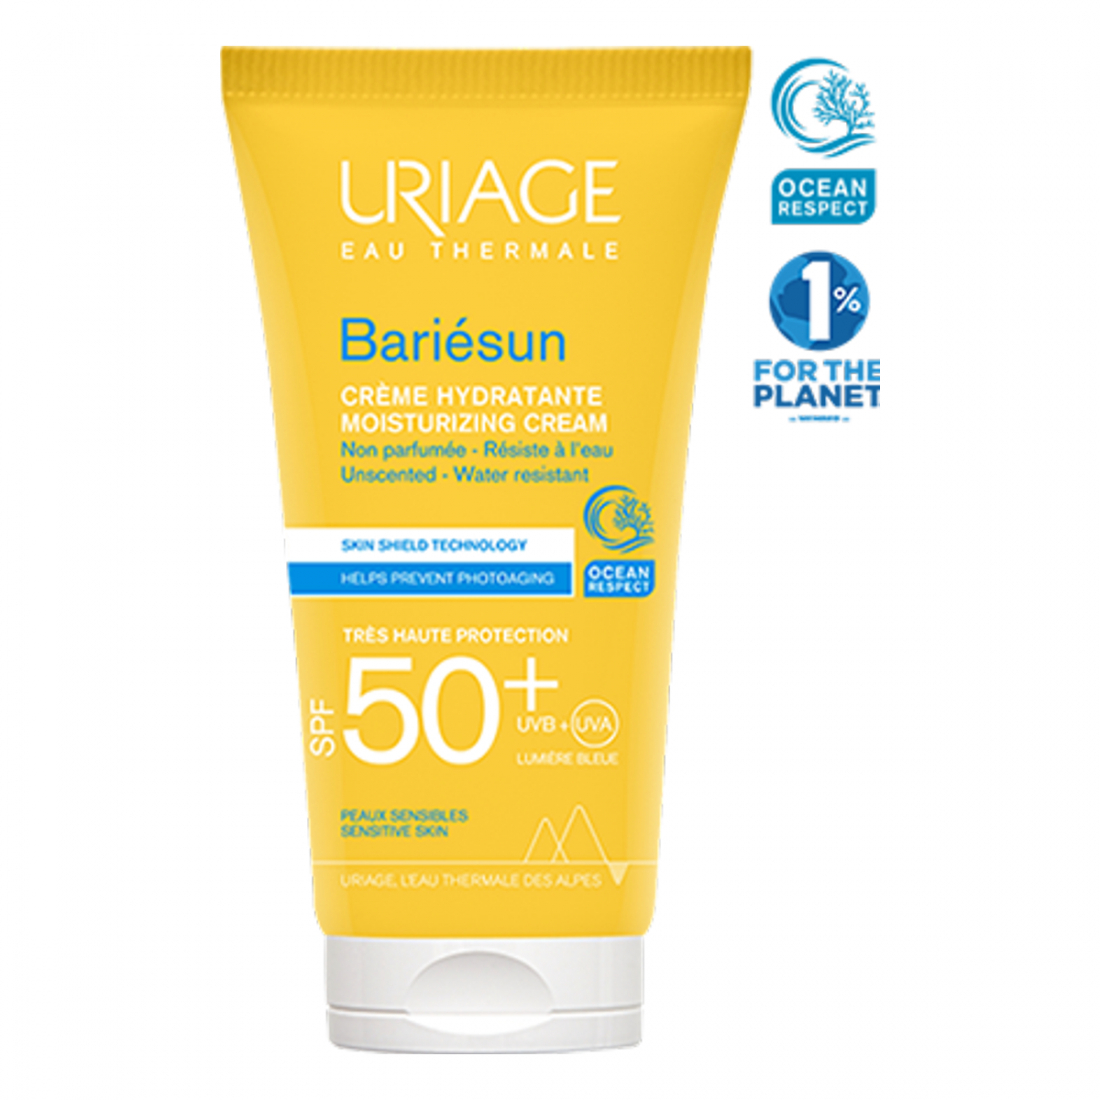 Bariésun Crème Hydratante non parfumée SPF 50+ - 50 ml